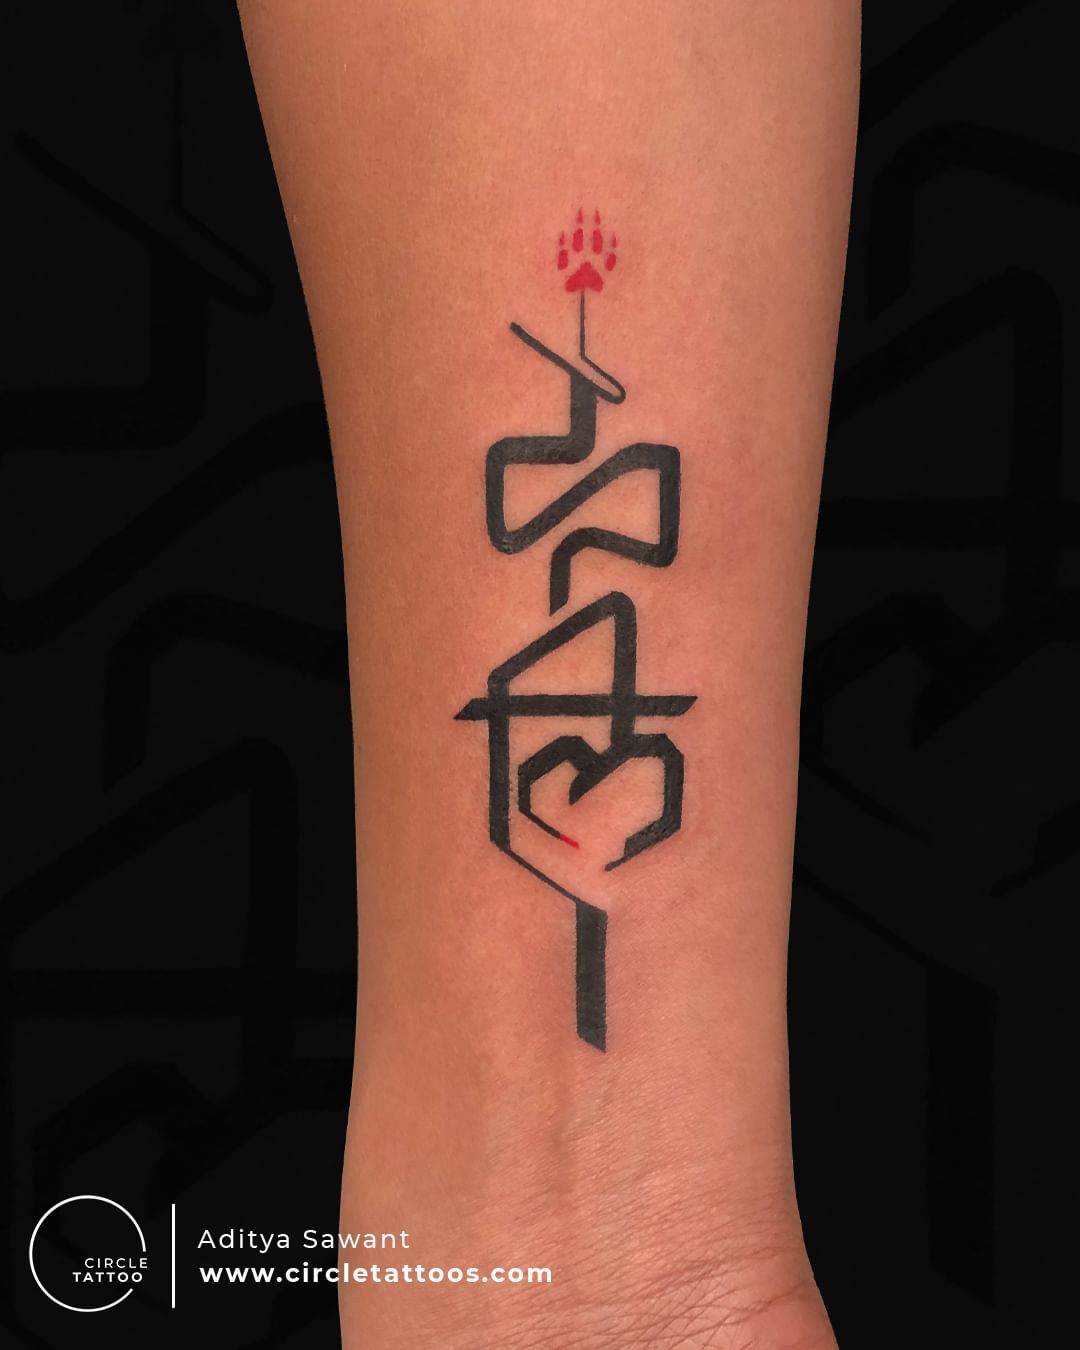 Jaydev Barad on Instagram Name Art tattoo By Artist Jay Barad   9974800700 at Blackbird Tattoo Studio namechain nametattoodesign  namenecklace namebracelets